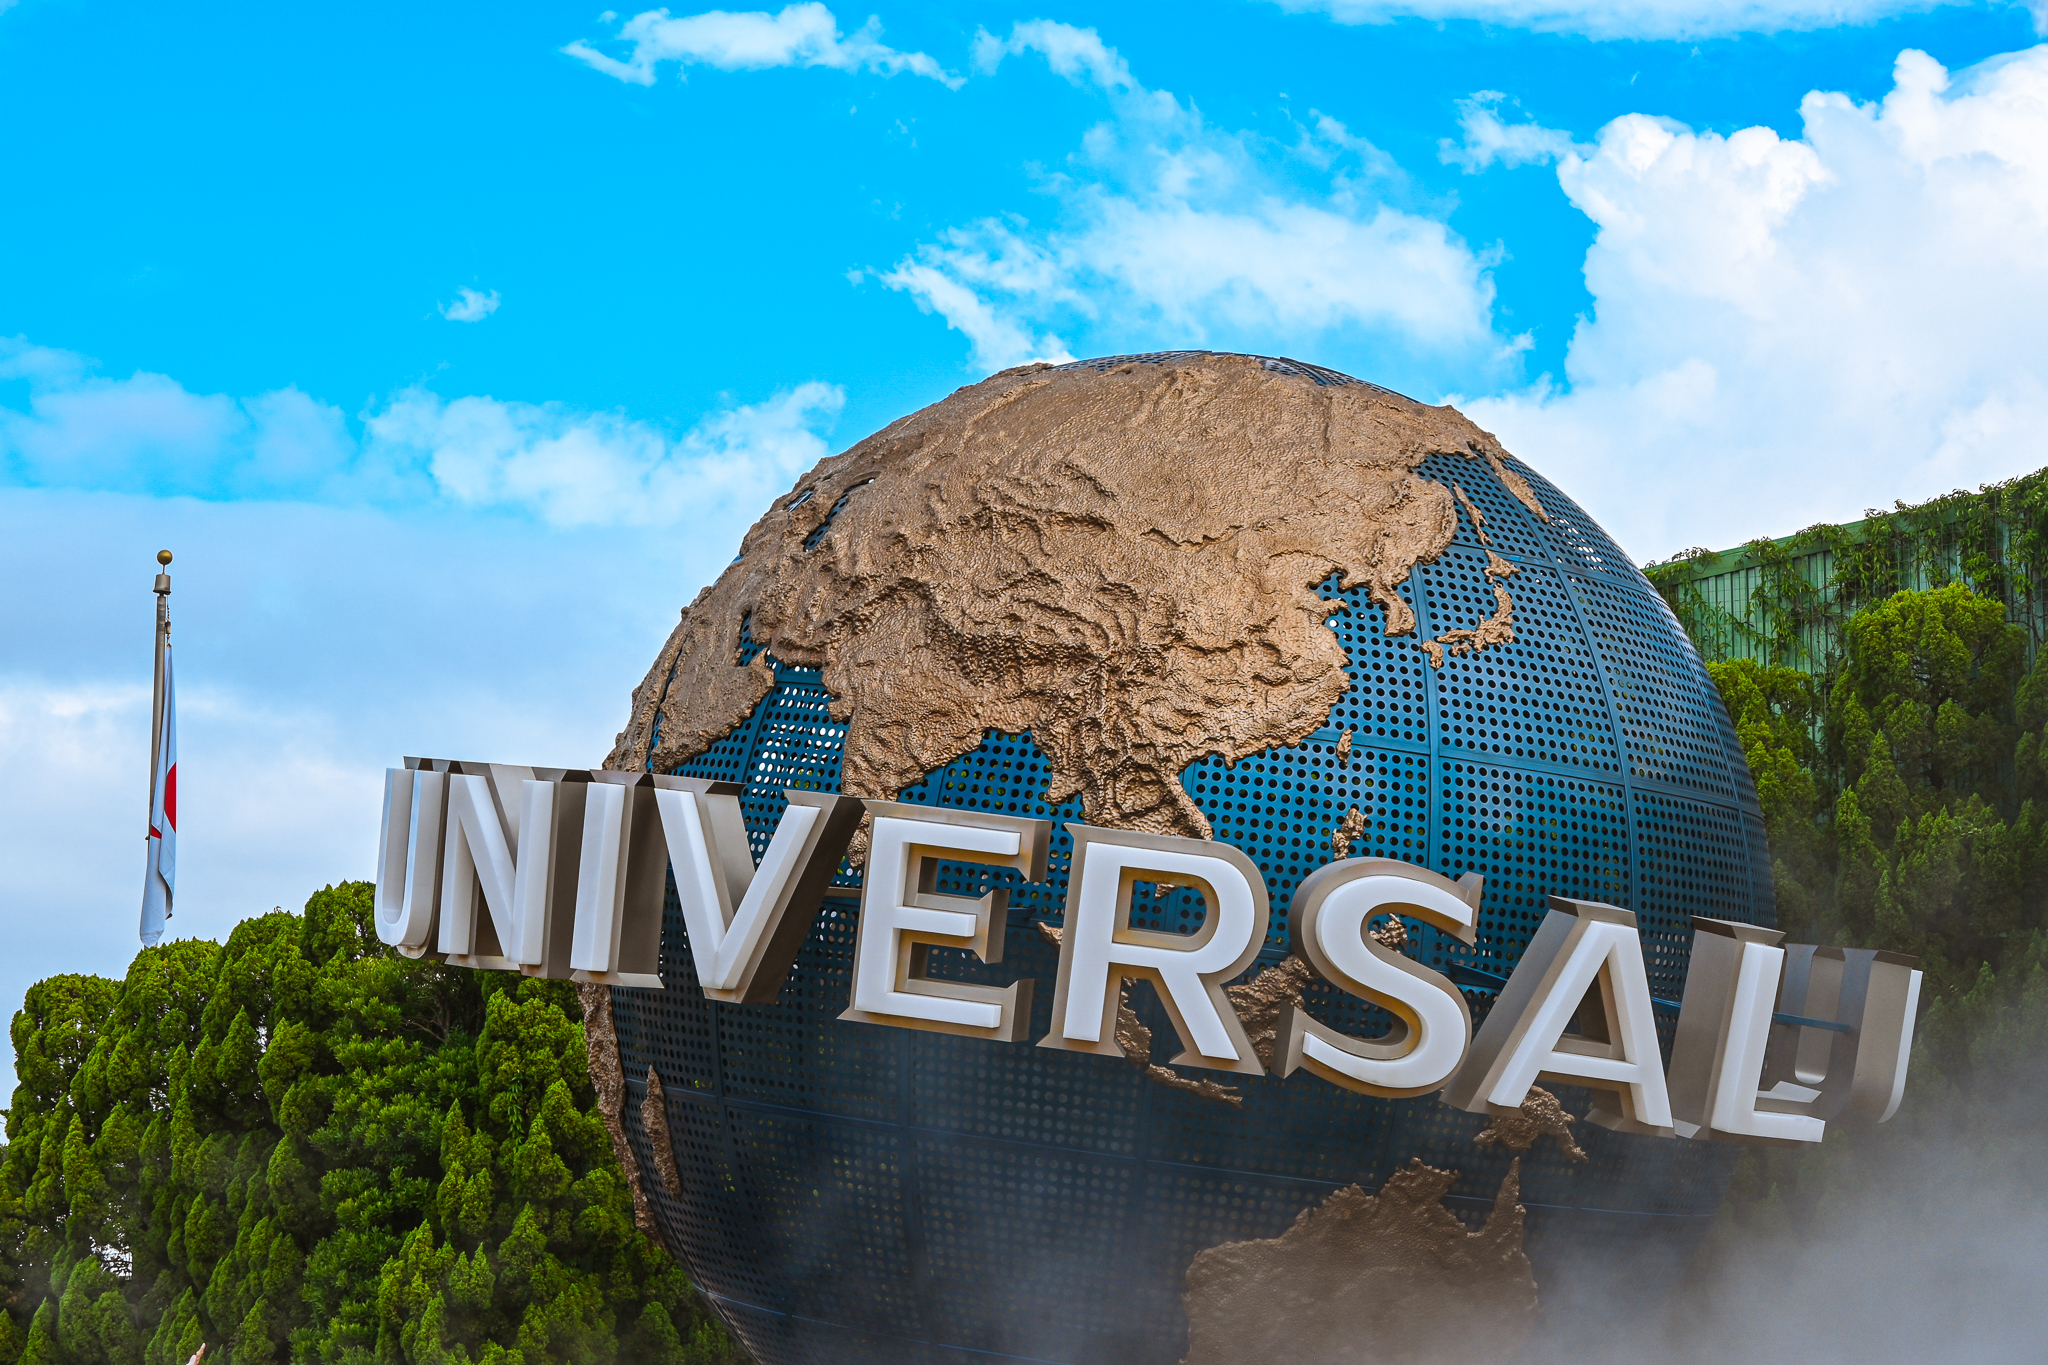 The spinning Universal Studios globe in Osaka Japan.